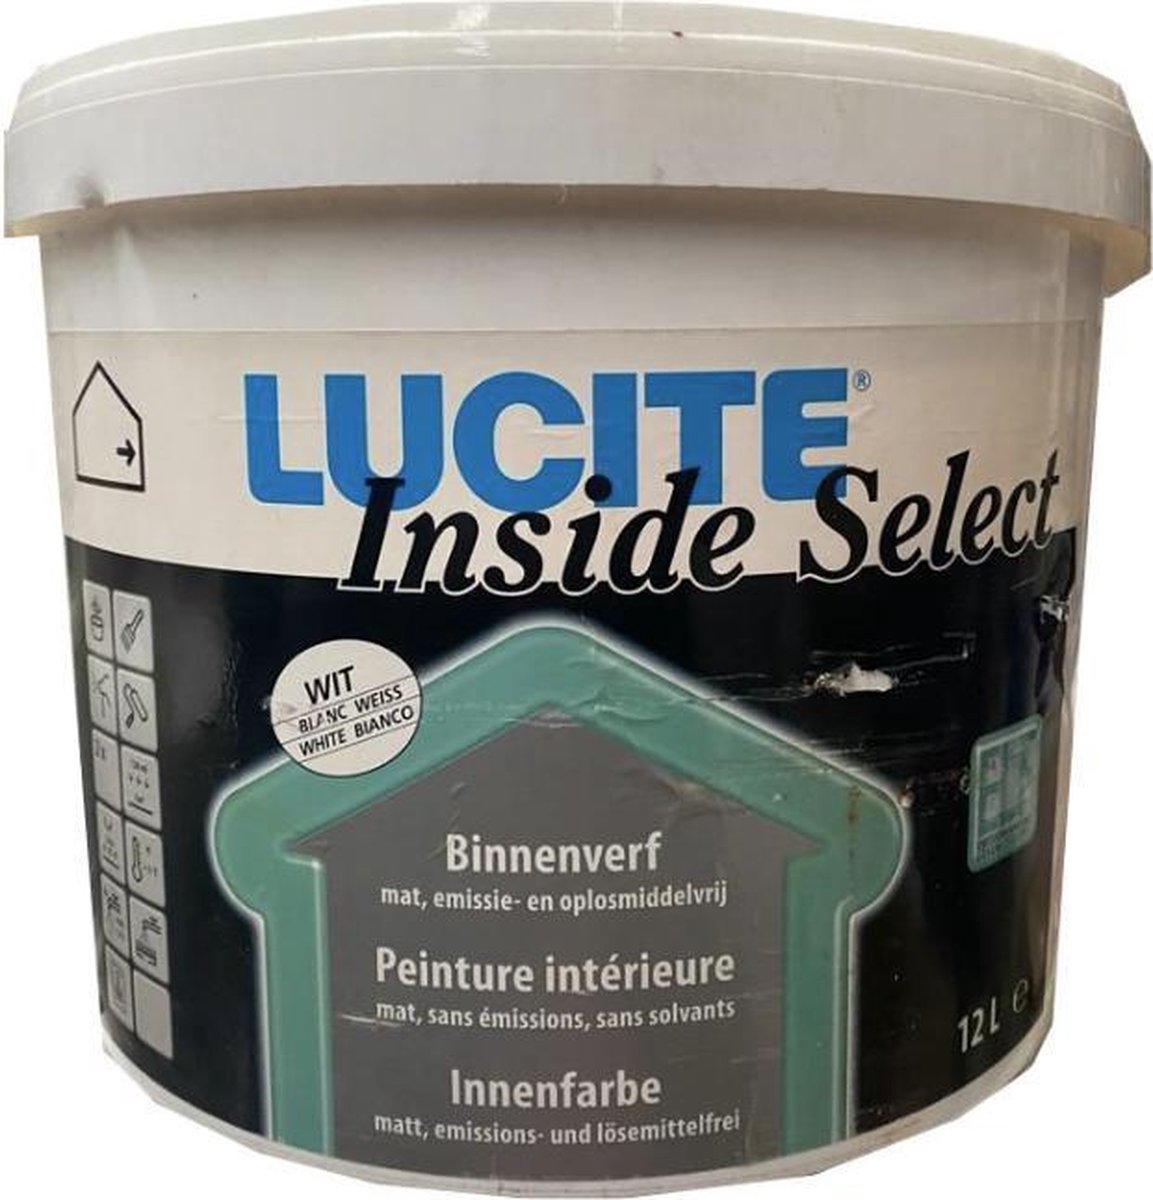 Lucite Inside Select - Binnen - muurverf - Wit Mat - 12L